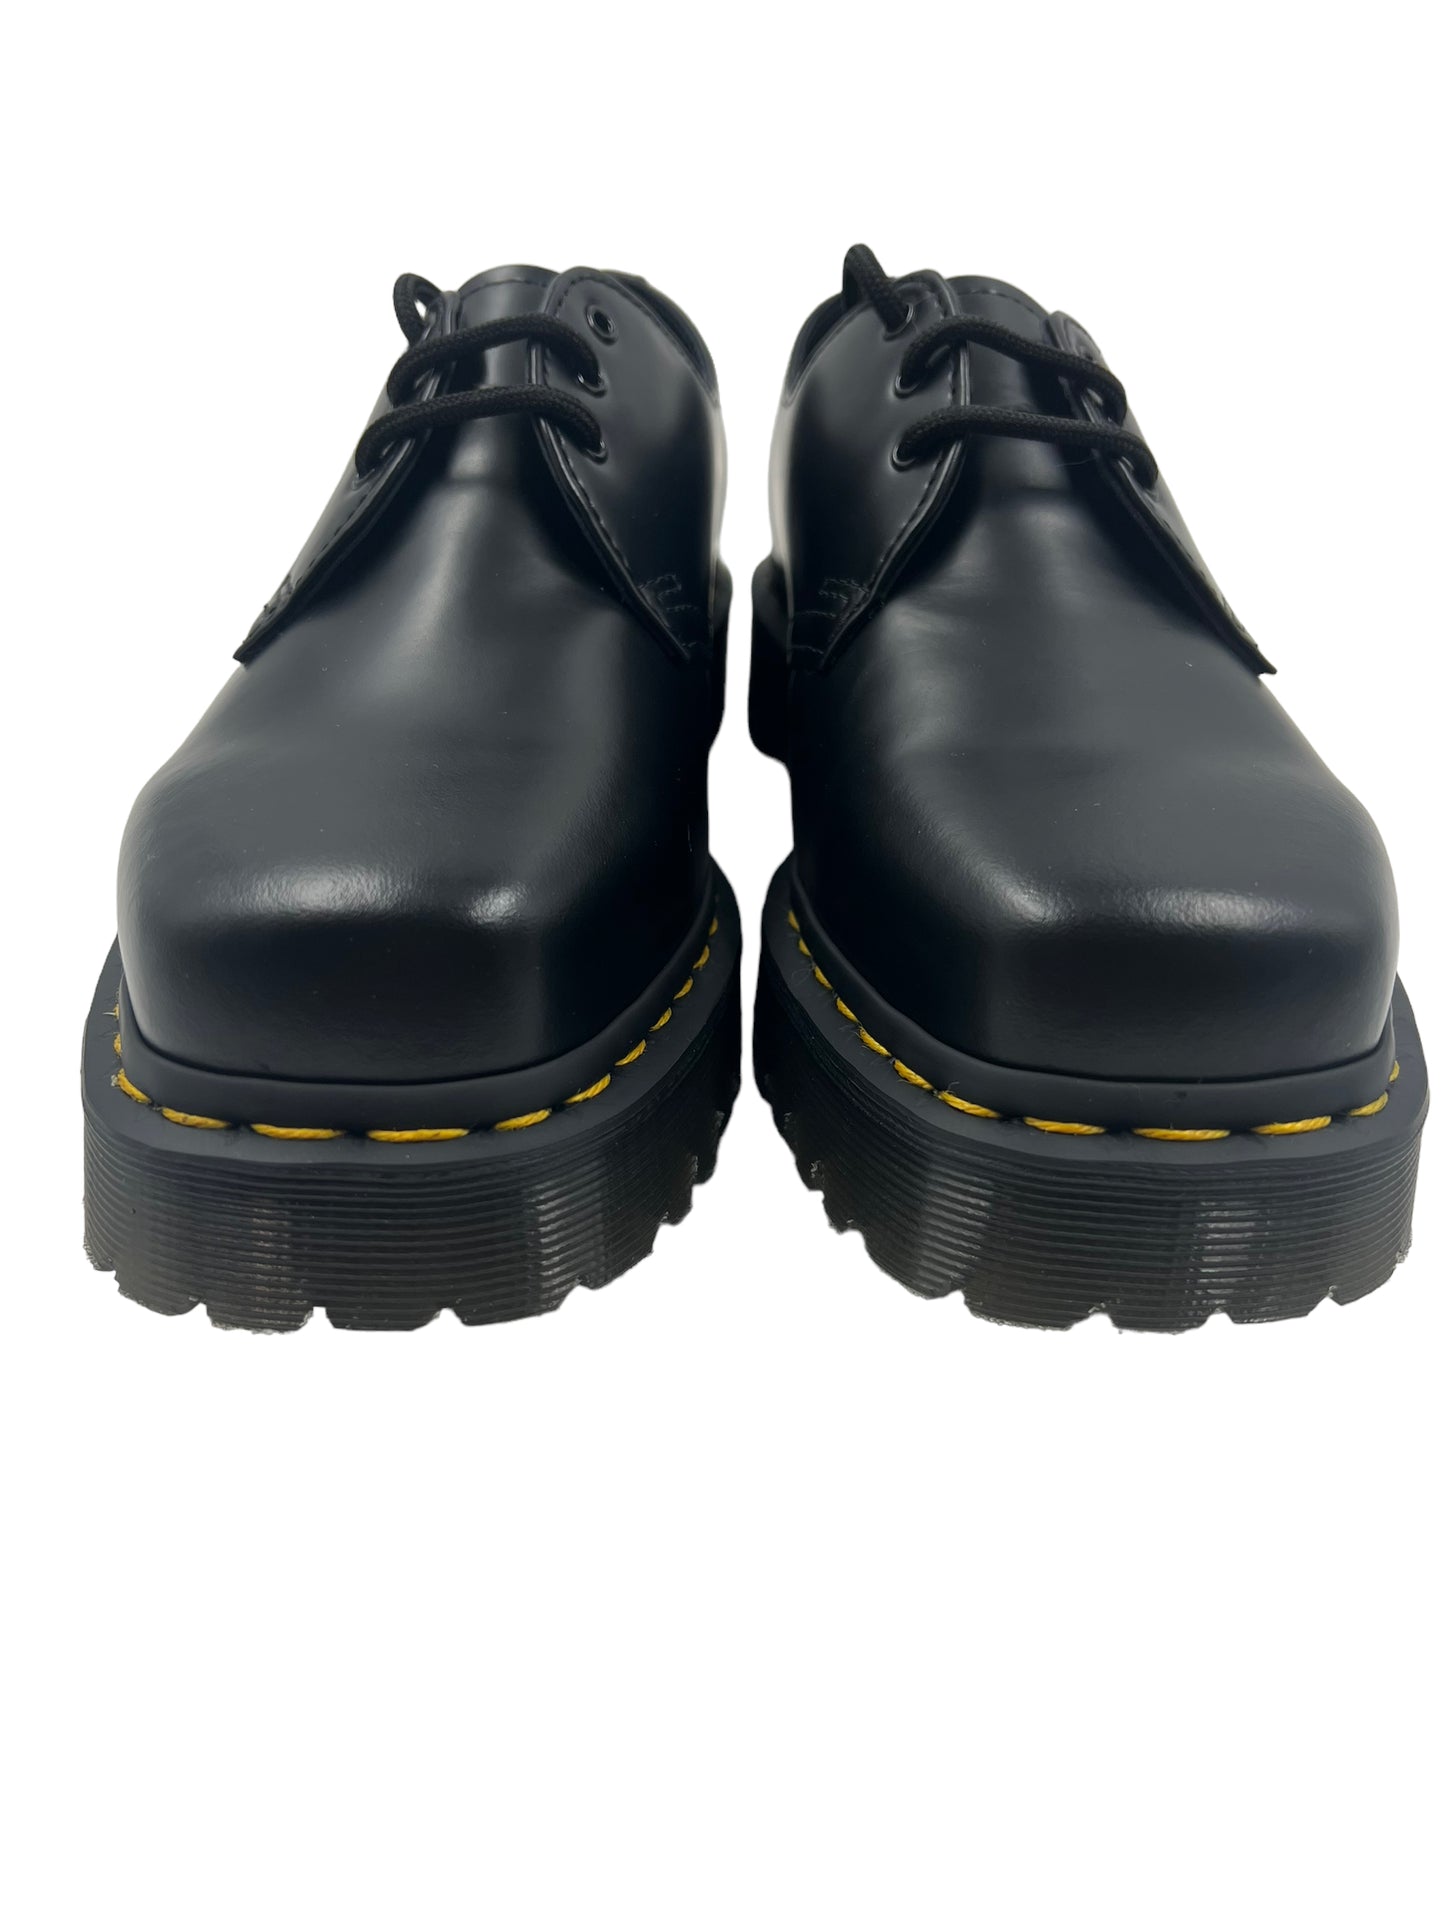 Dr. Martens Men's Size 7/Women's Size 8 1461 Bex Squared Oxford Shoes